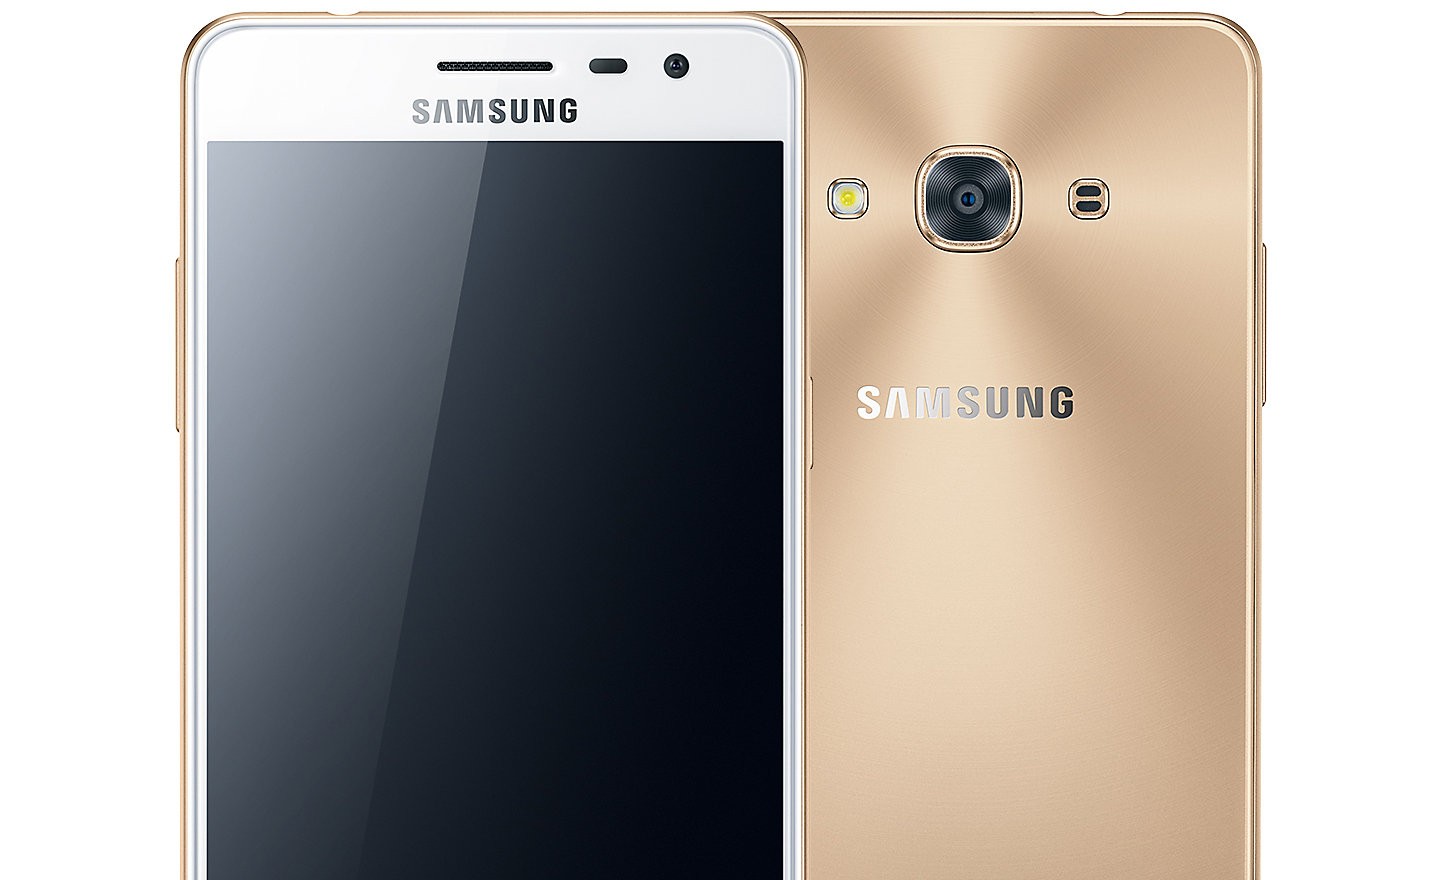 Samsung Galaxy J3 Pro Plus